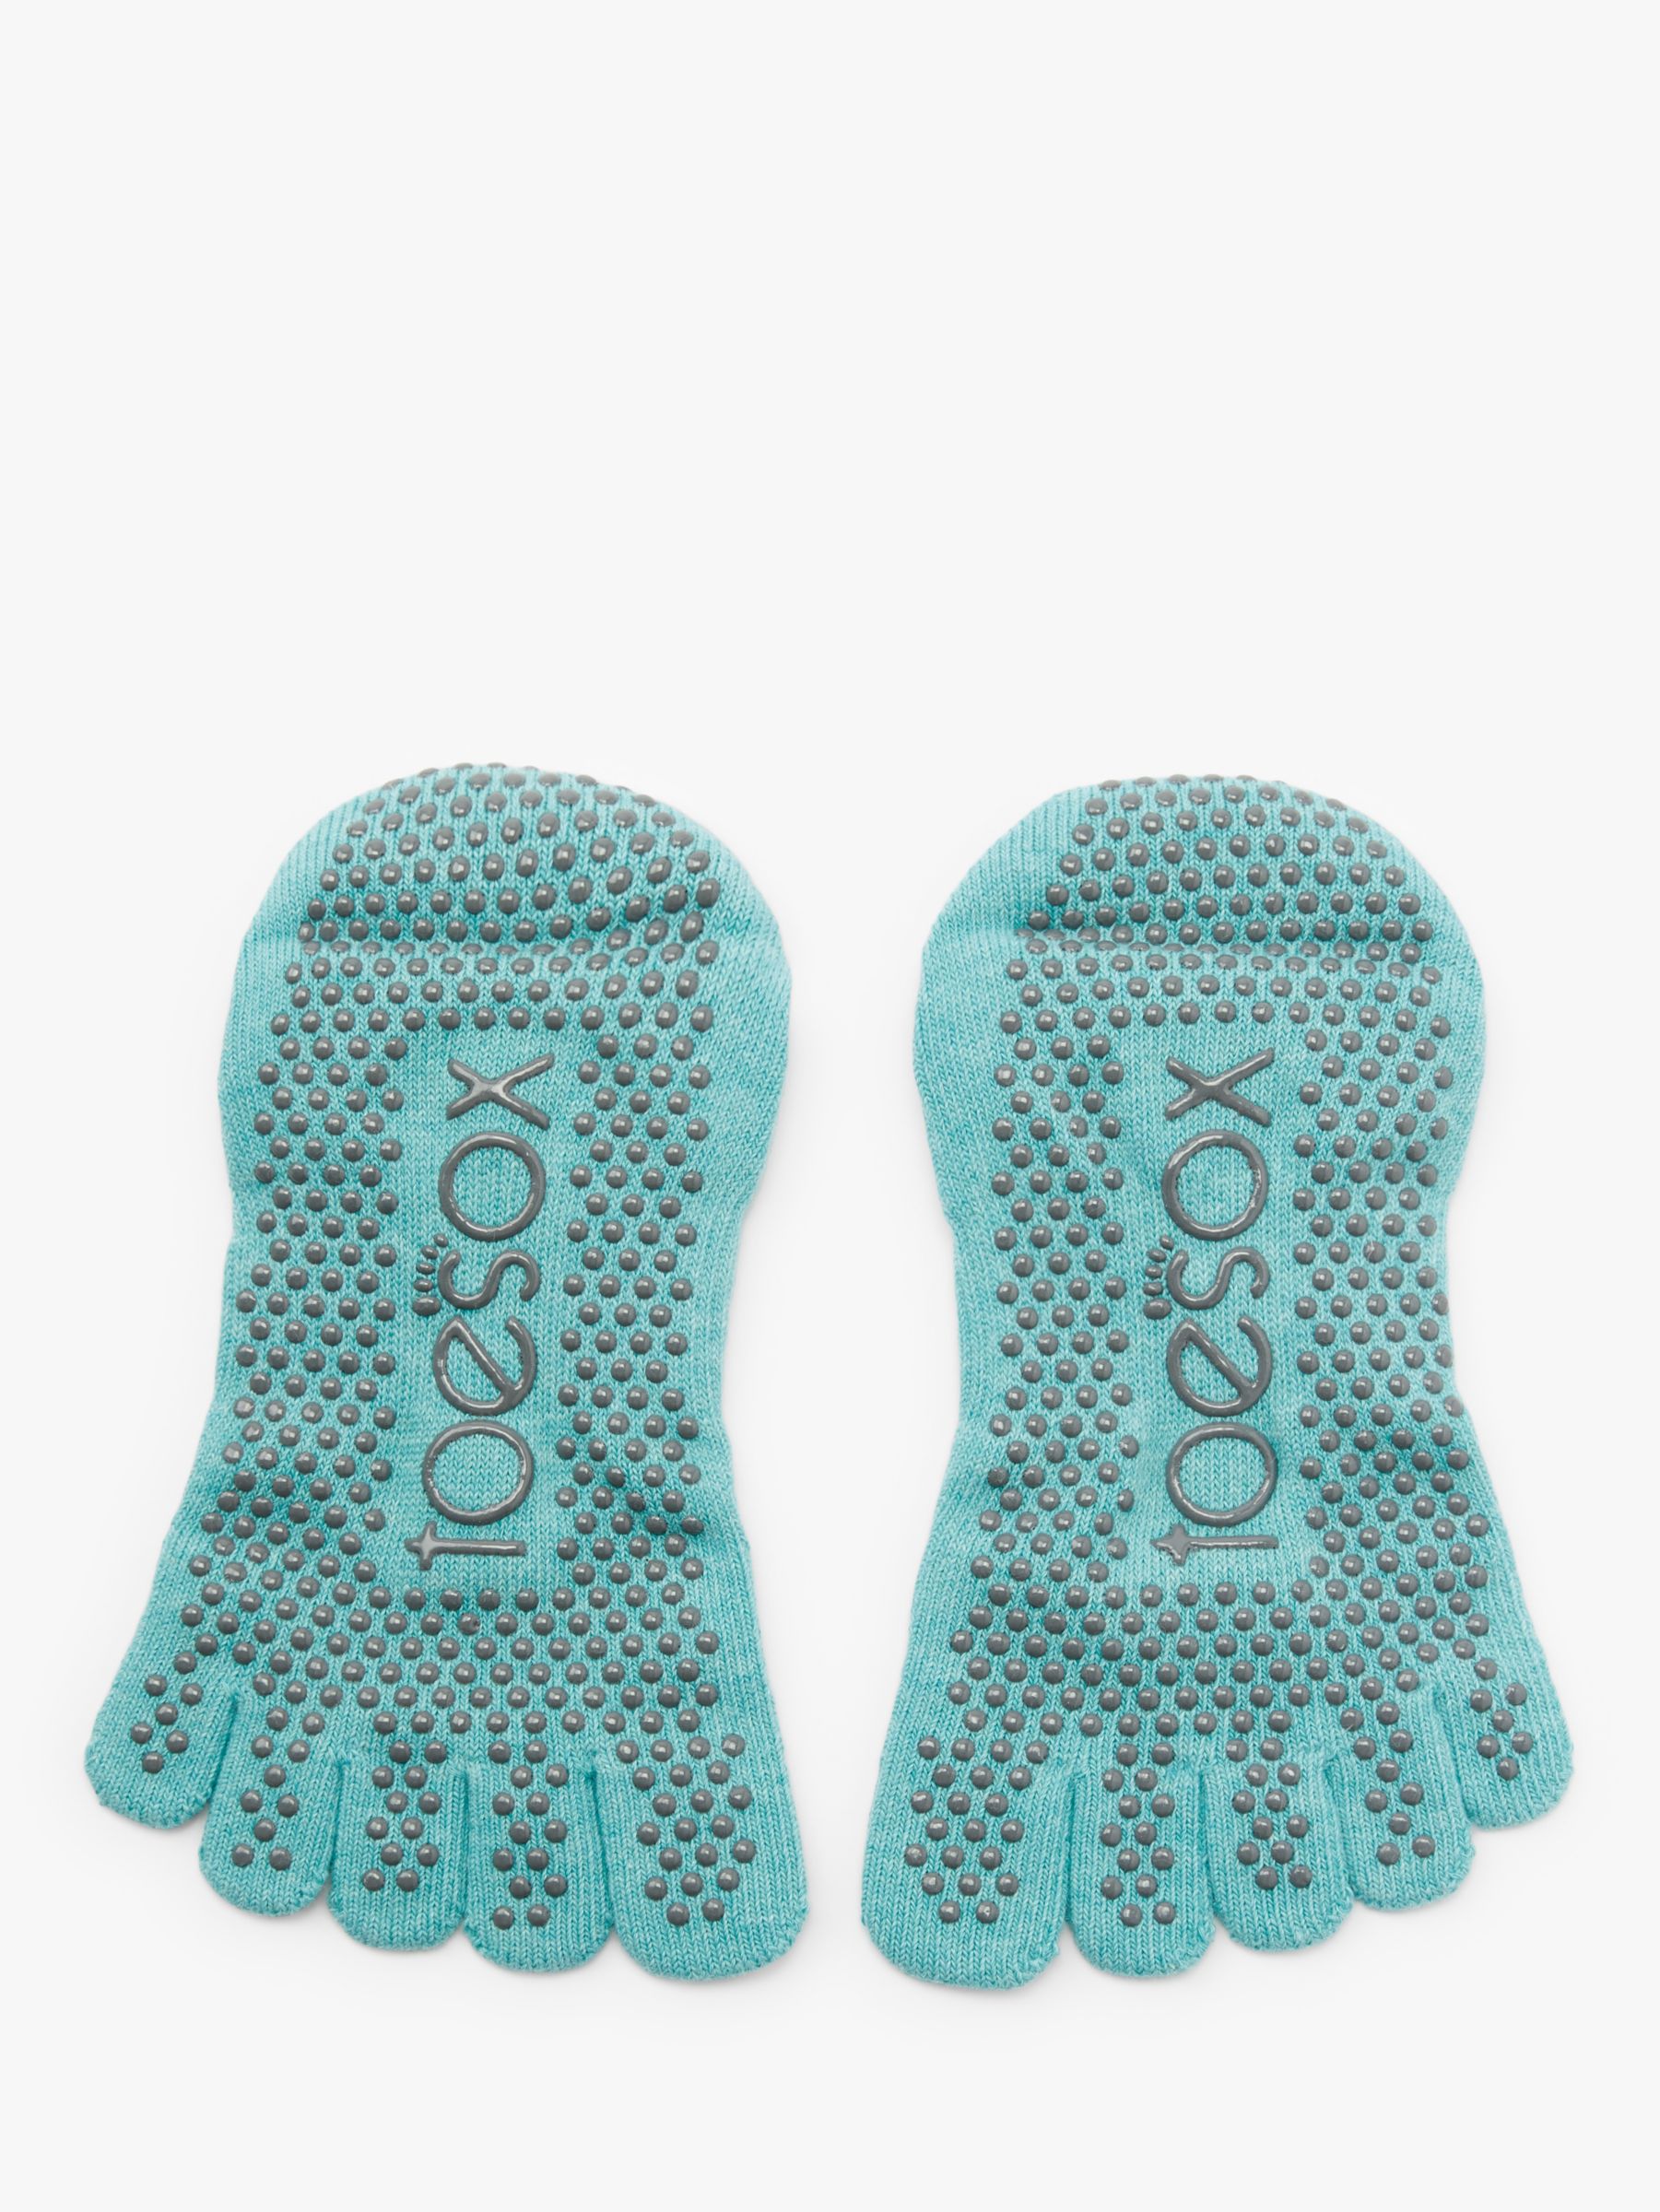 Mad ToeSox Full Toe Low Rise Grip Socks